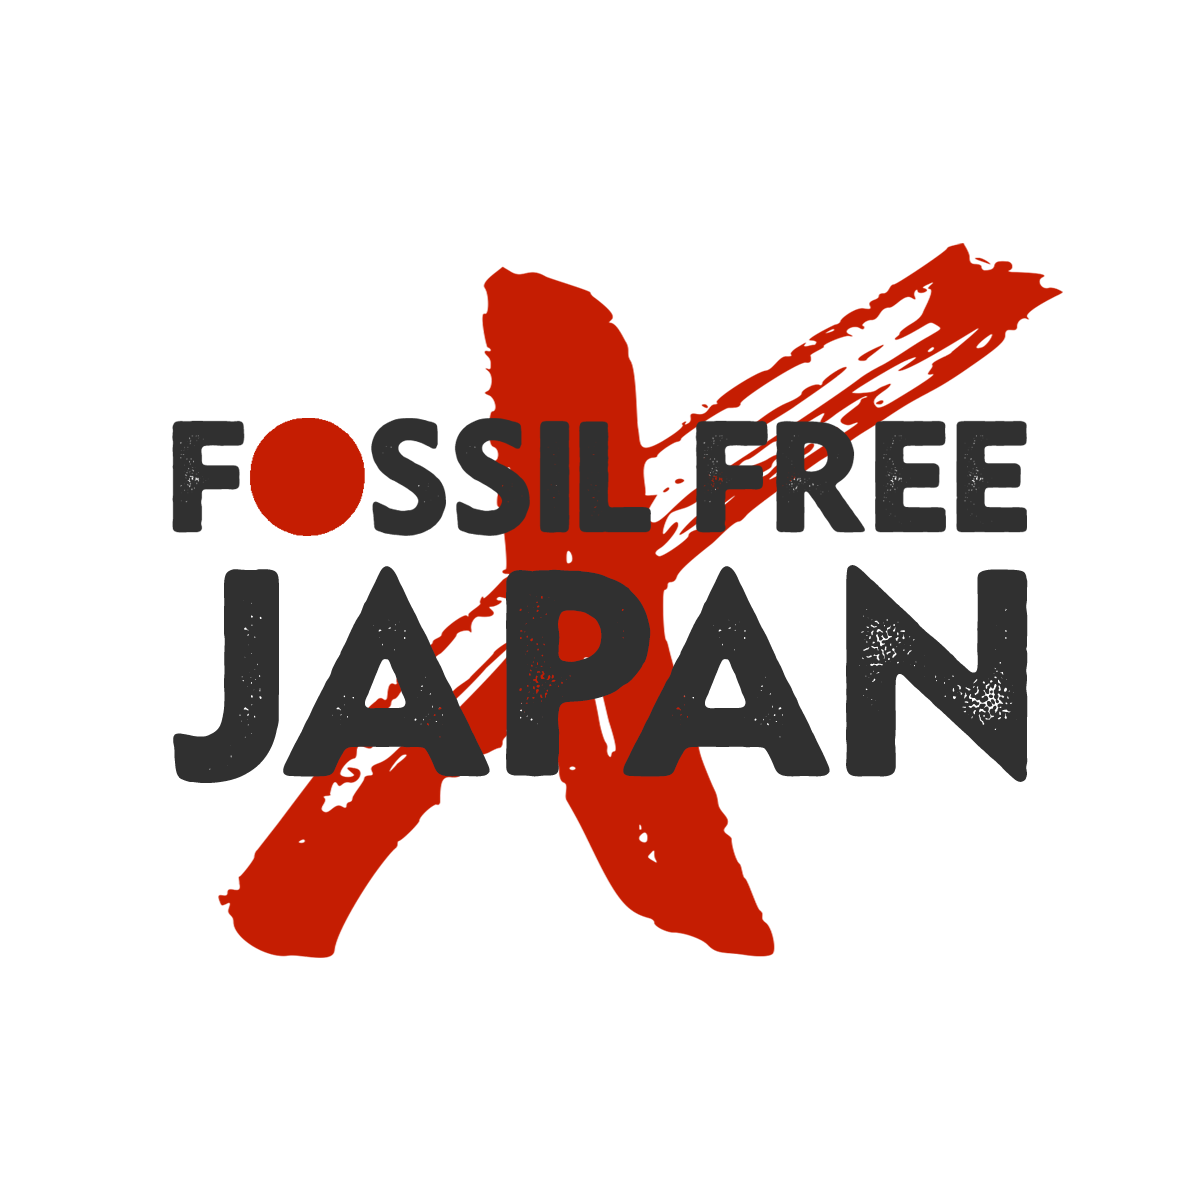 Fossil Free Japan